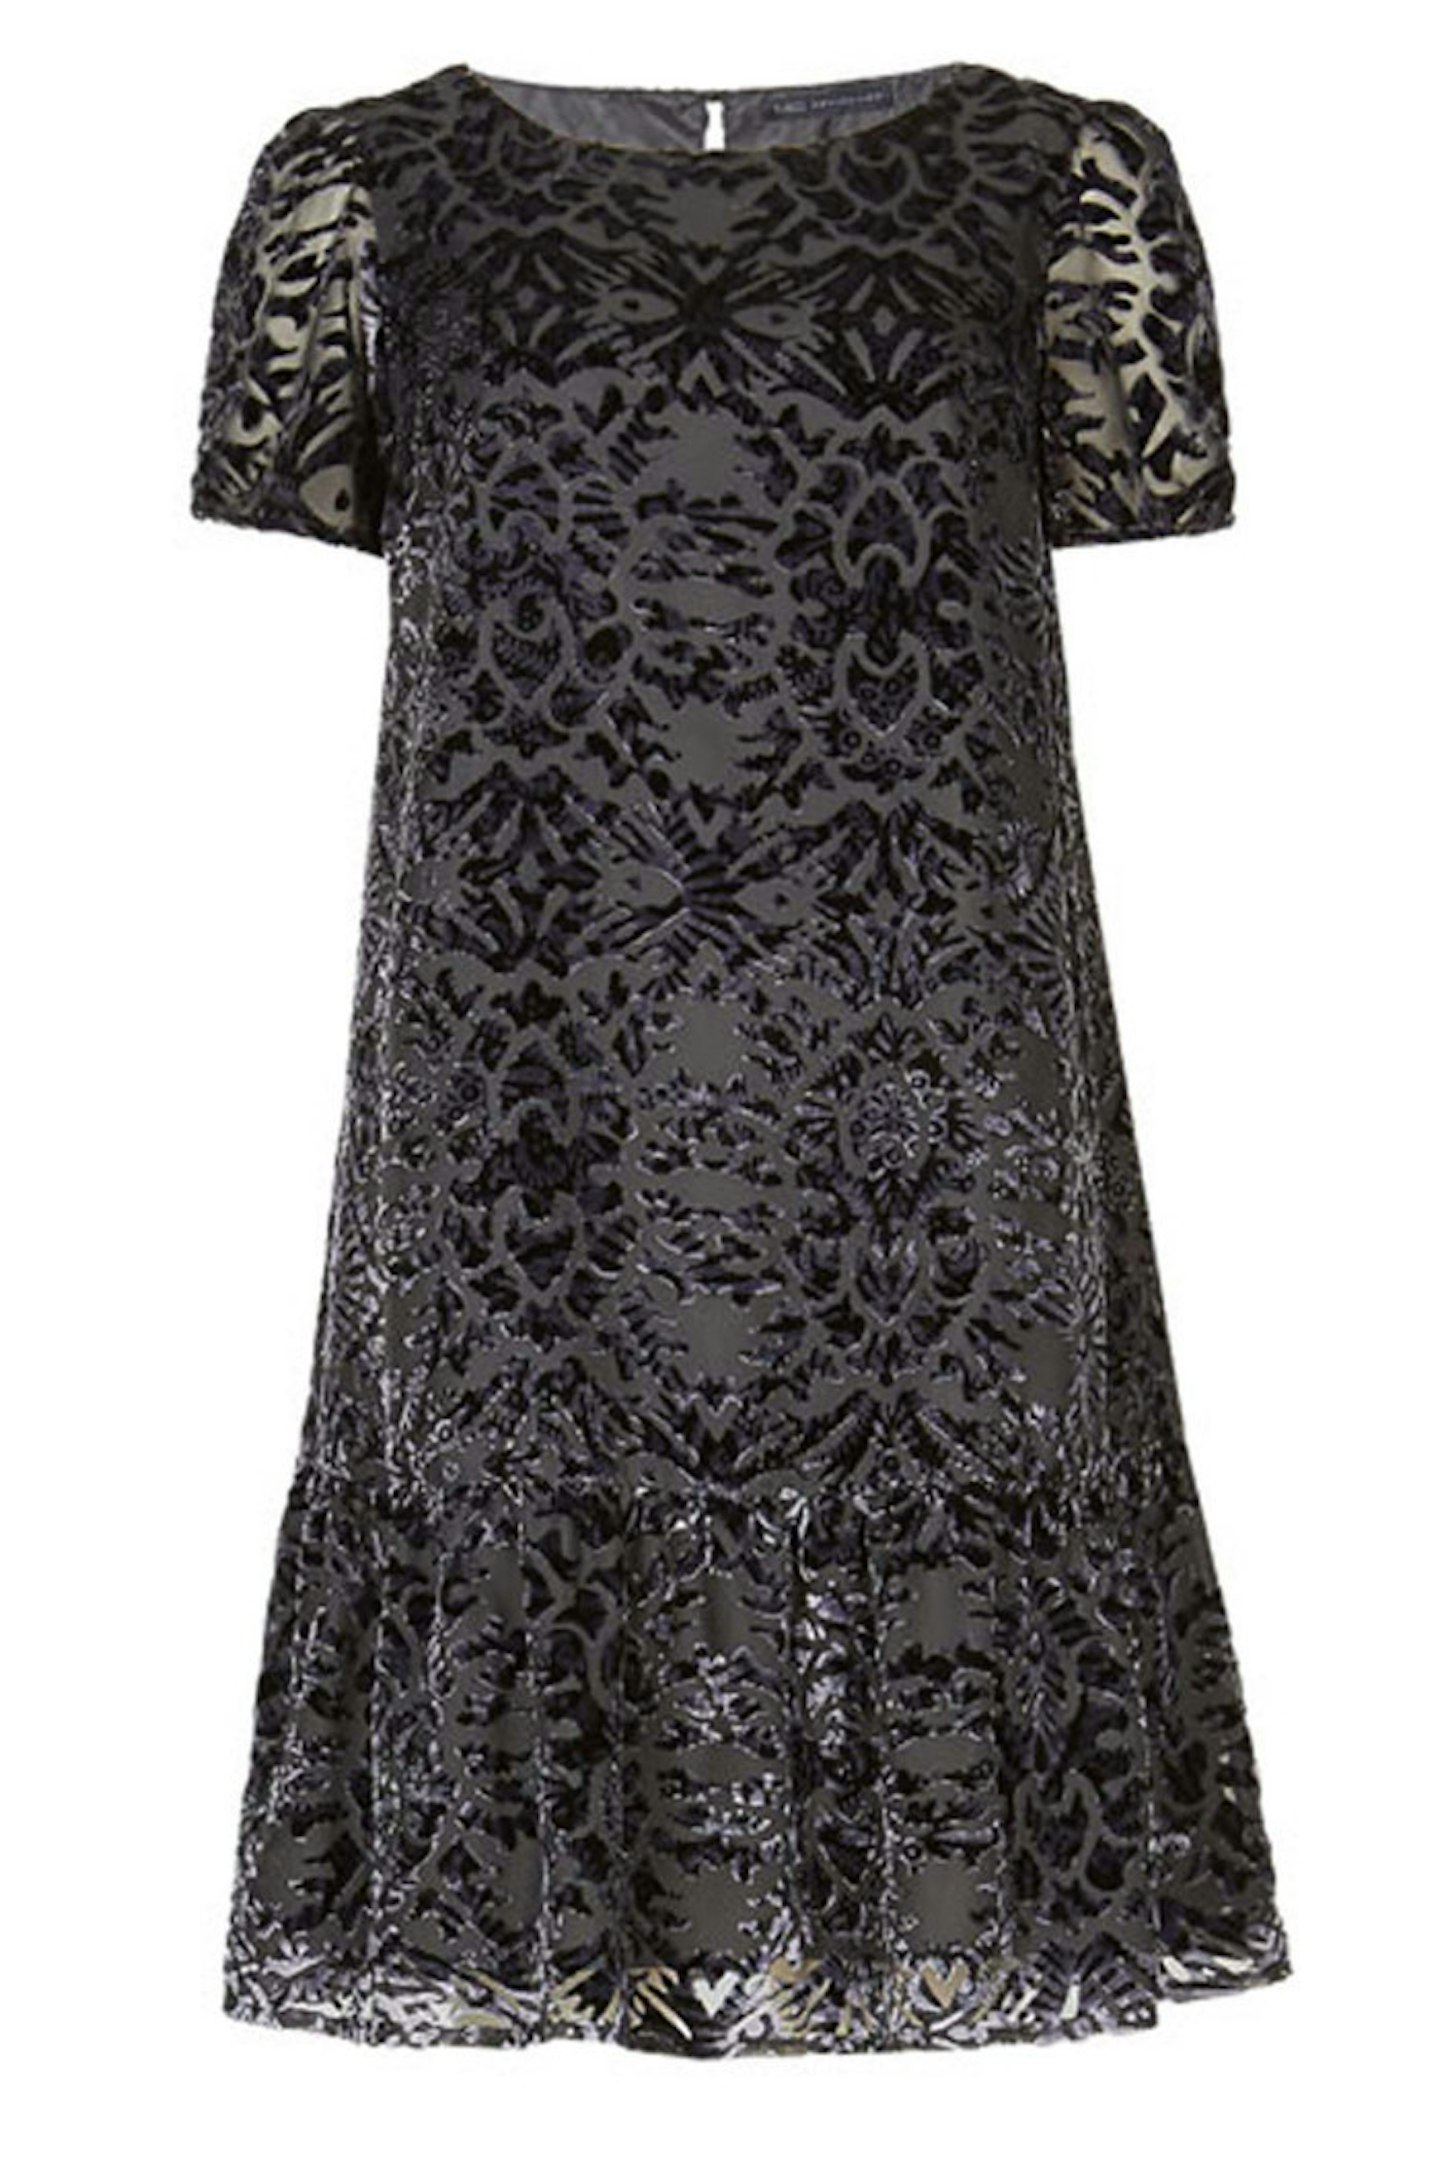 Metal grey velour burnout dress with drop waist, £49.50, M&S